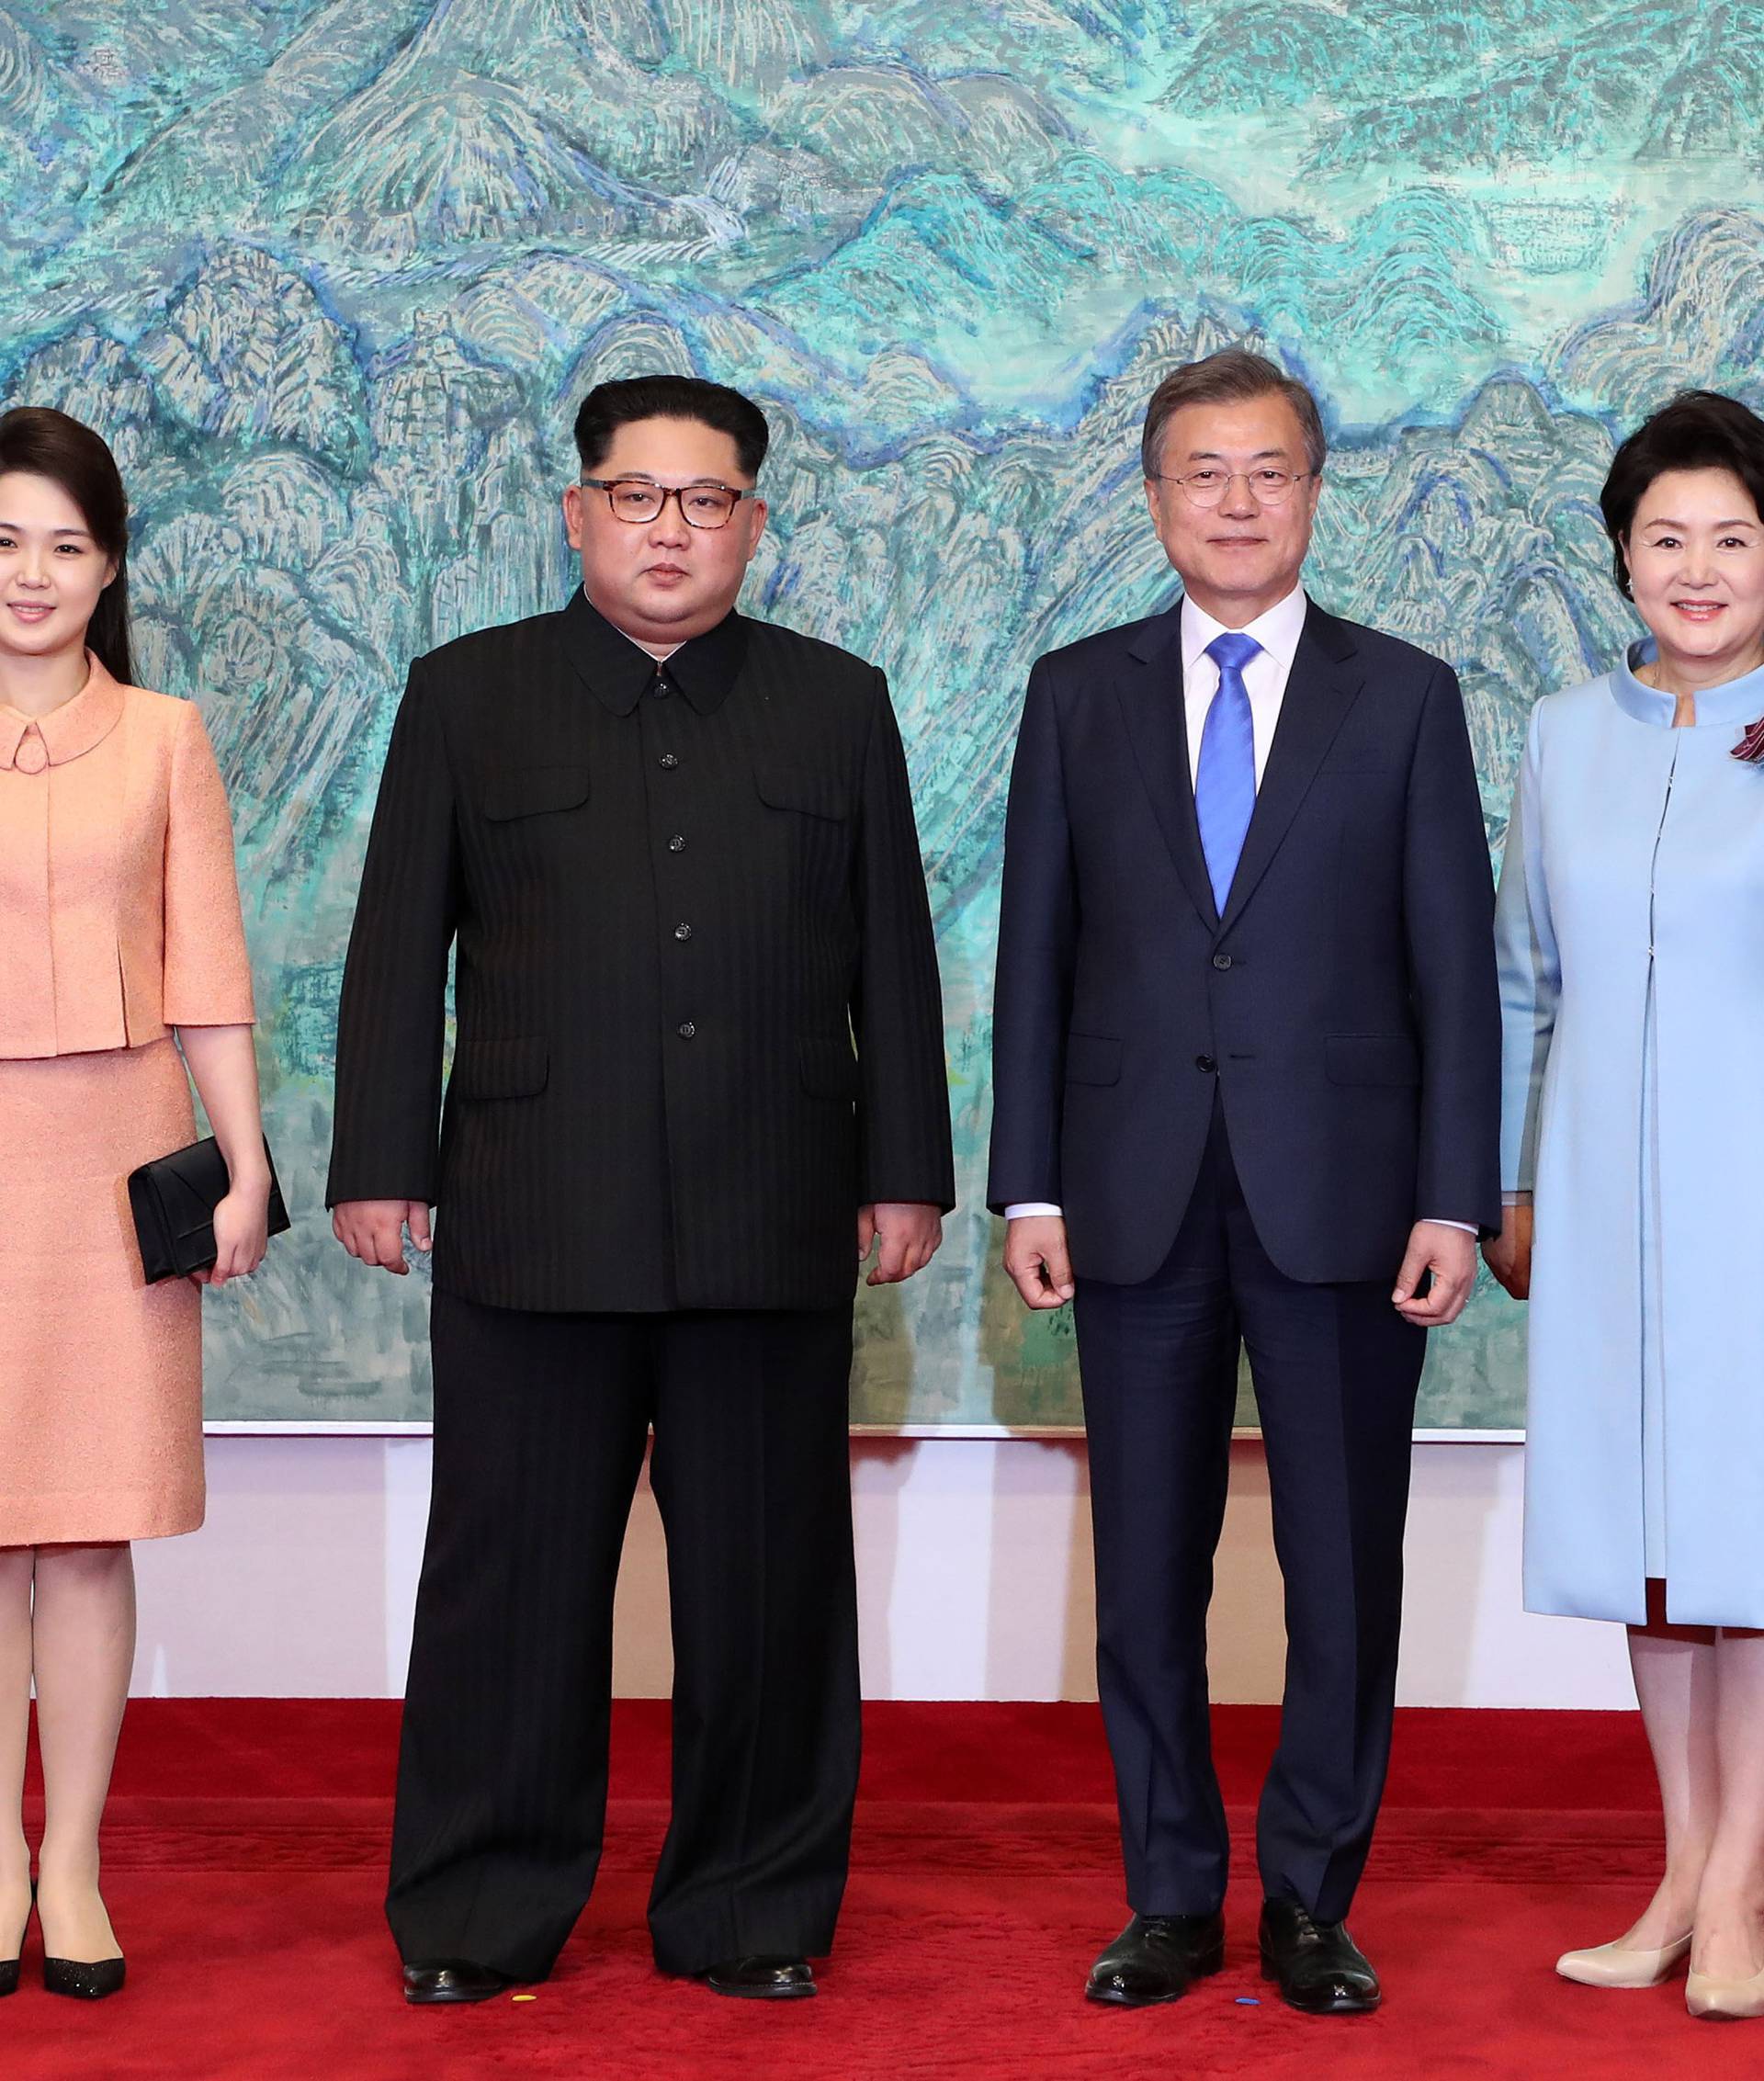 South korea - North korea Summit